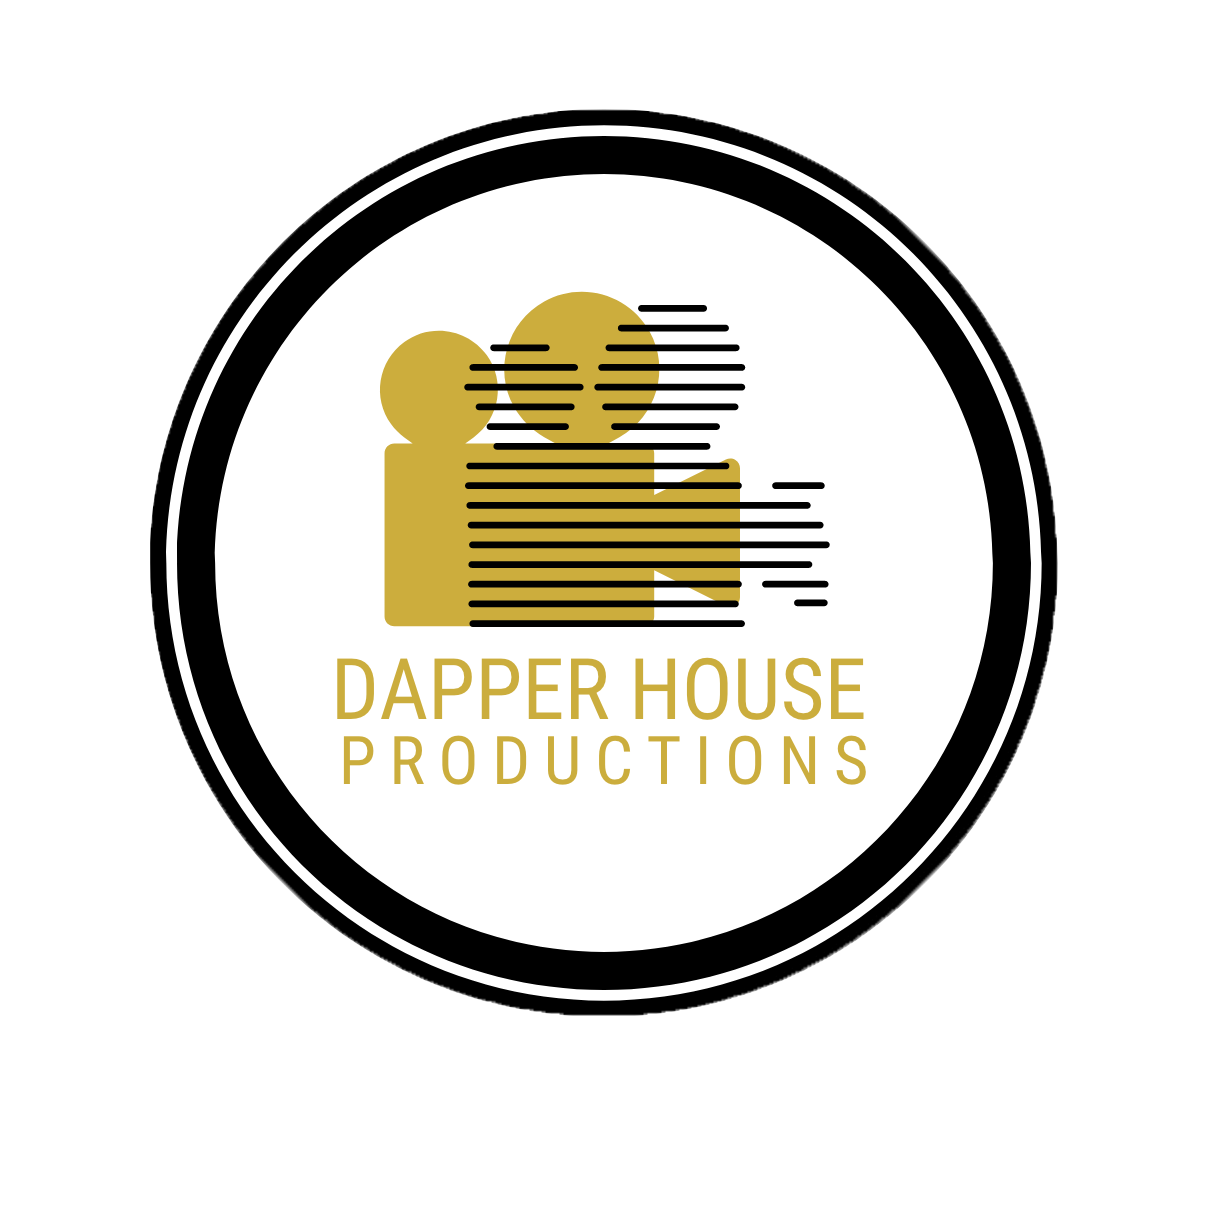 DAPPER HOUSE PRODUCTIONS